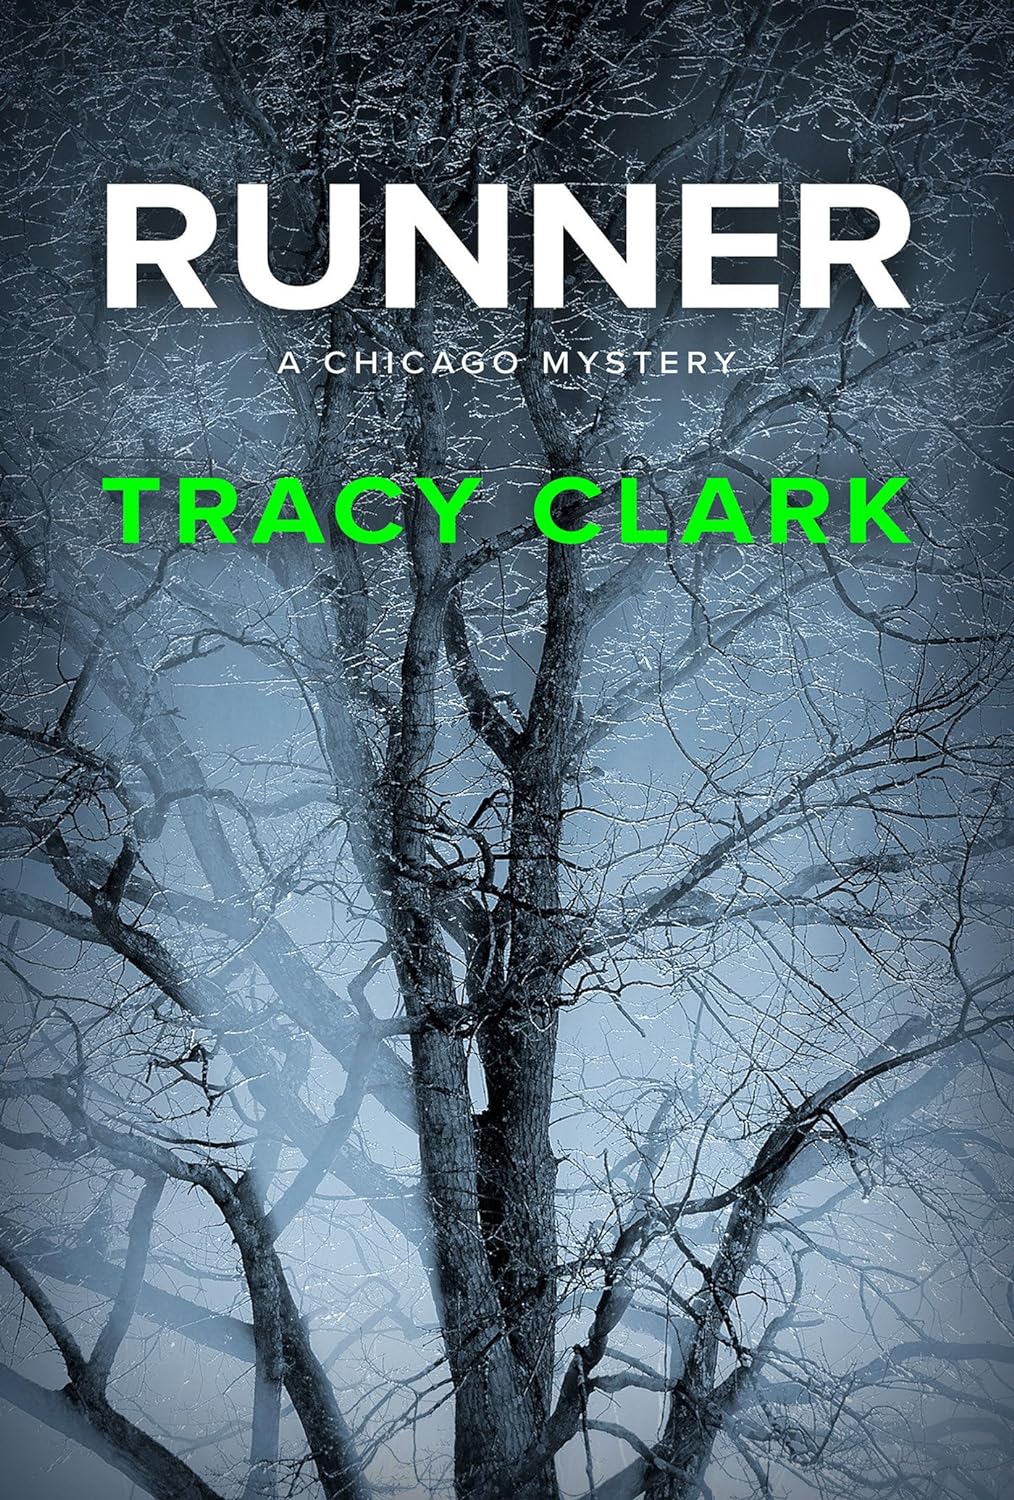 Runner by Tracy Clark